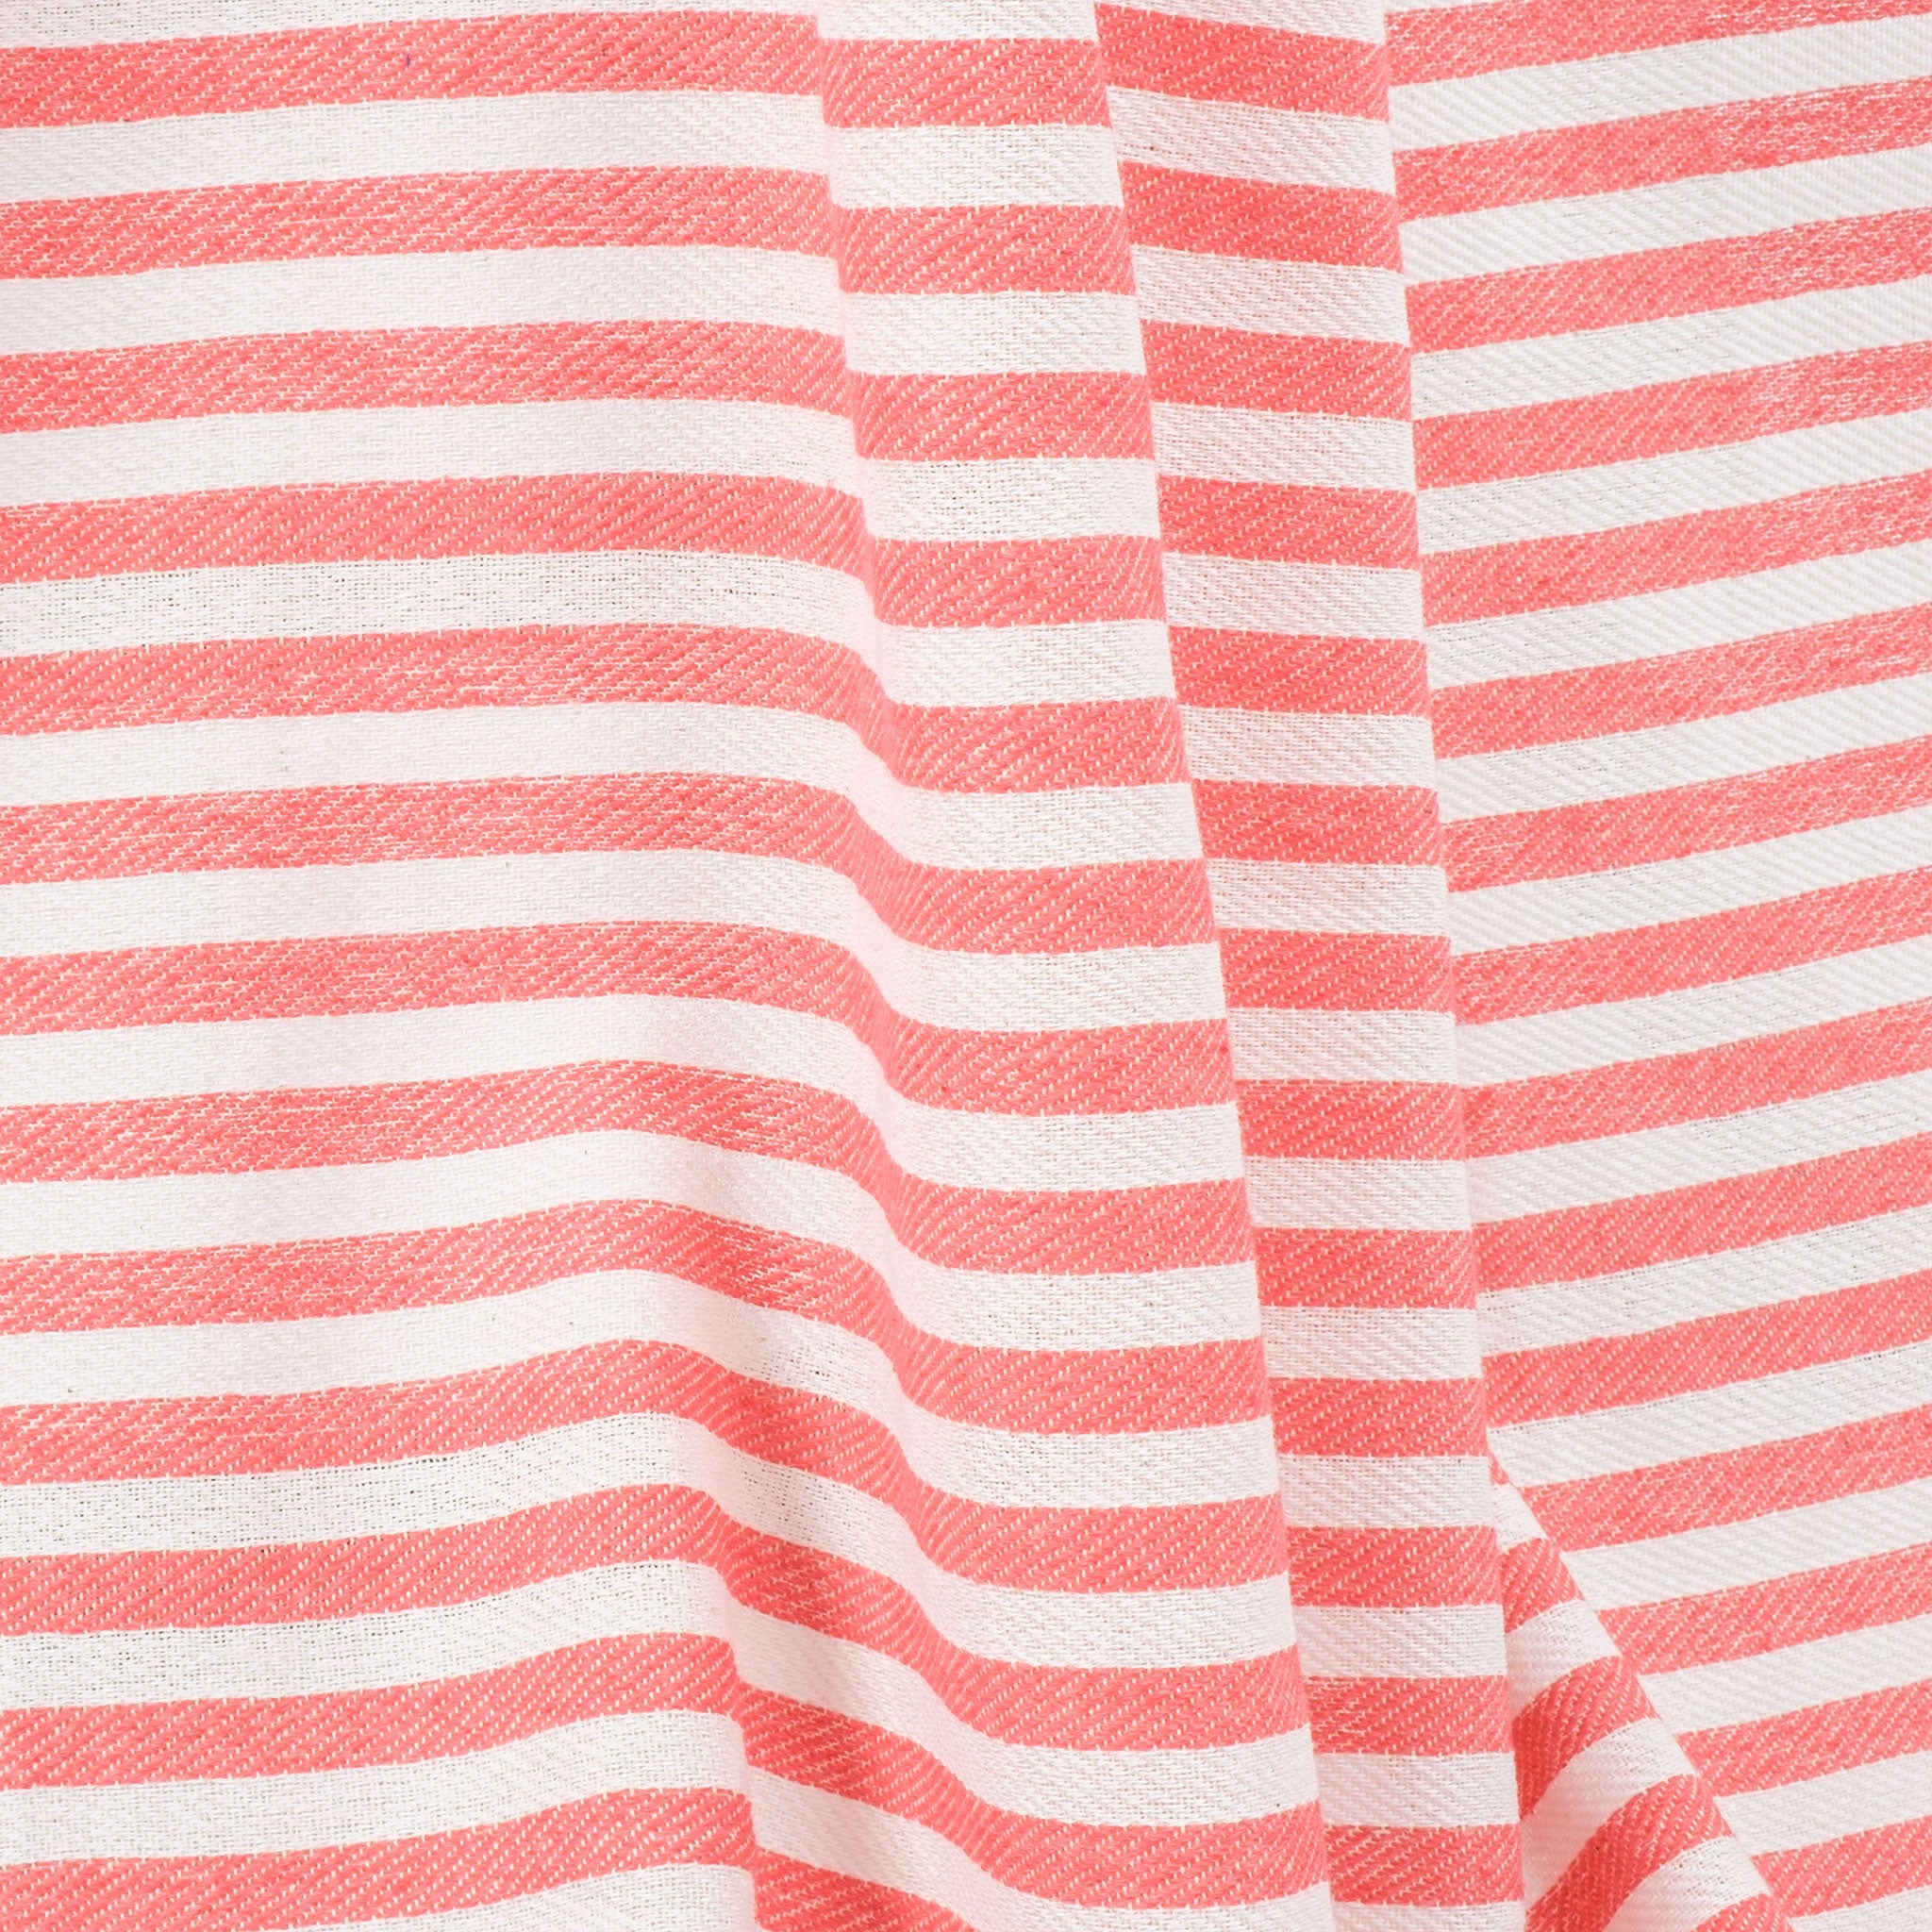 American Soft Linen - 100% Cotton Turkish Peshtemal Towels 40x70 Inches - Coral-Stripe - 2